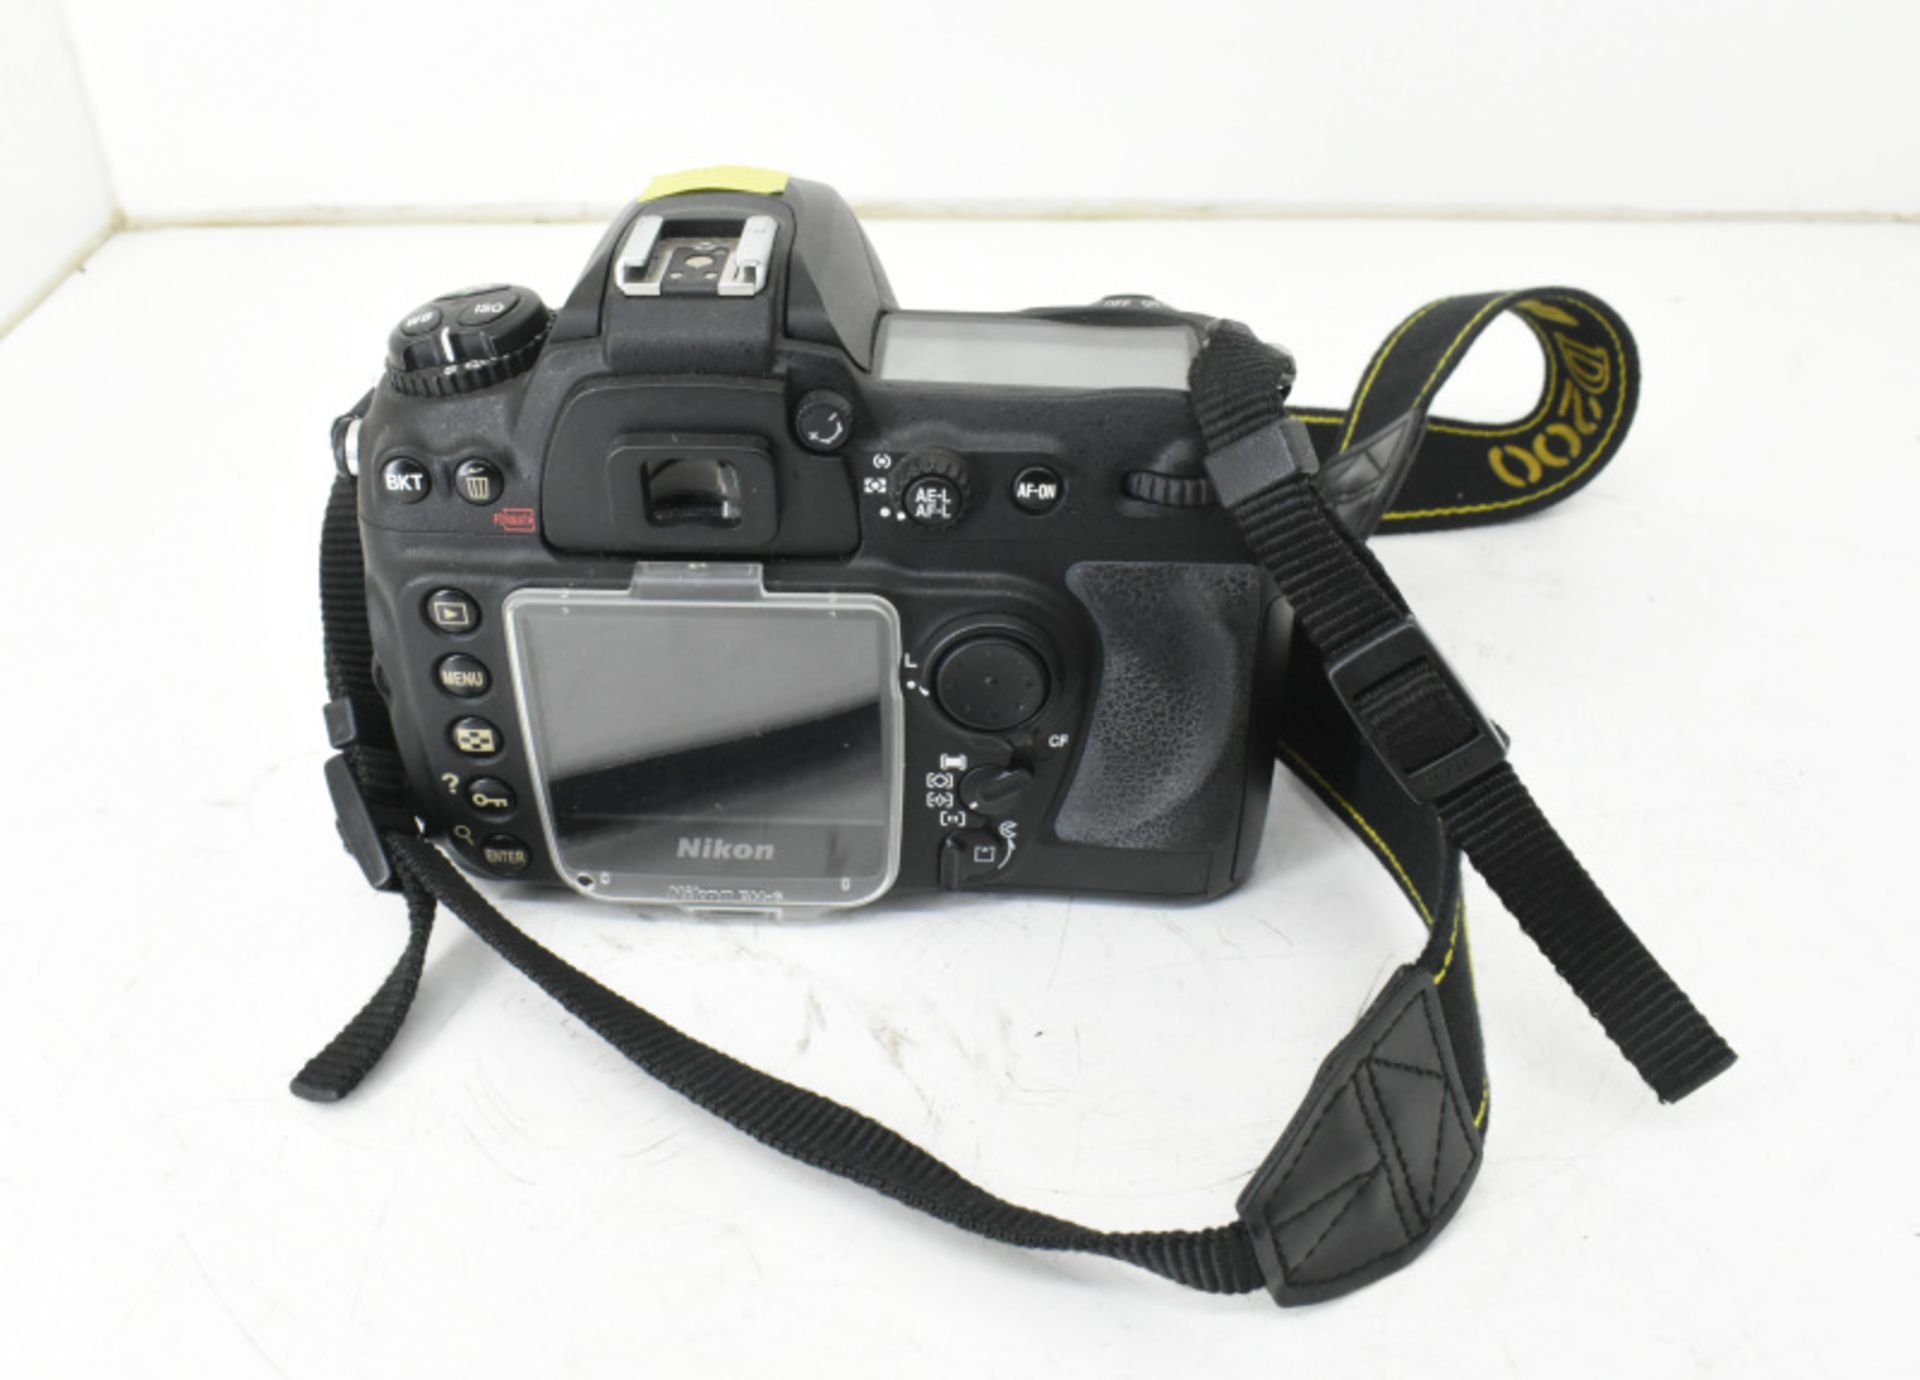 Nikon D200 SLR Digital Camera Body - Image 2 of 2